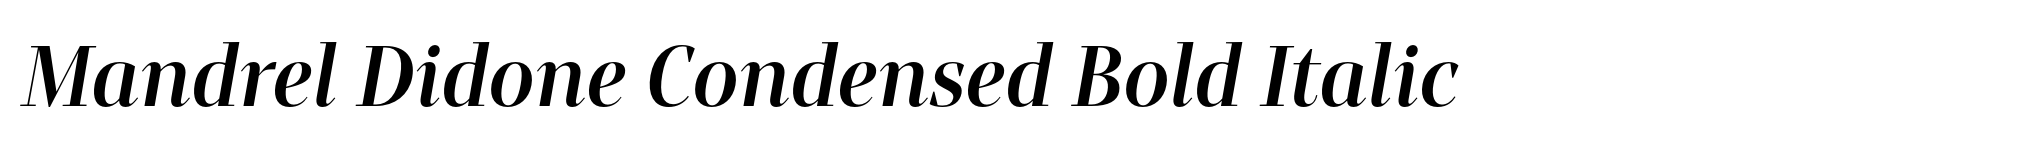 Mandrel Didone Condensed Bold Italic image